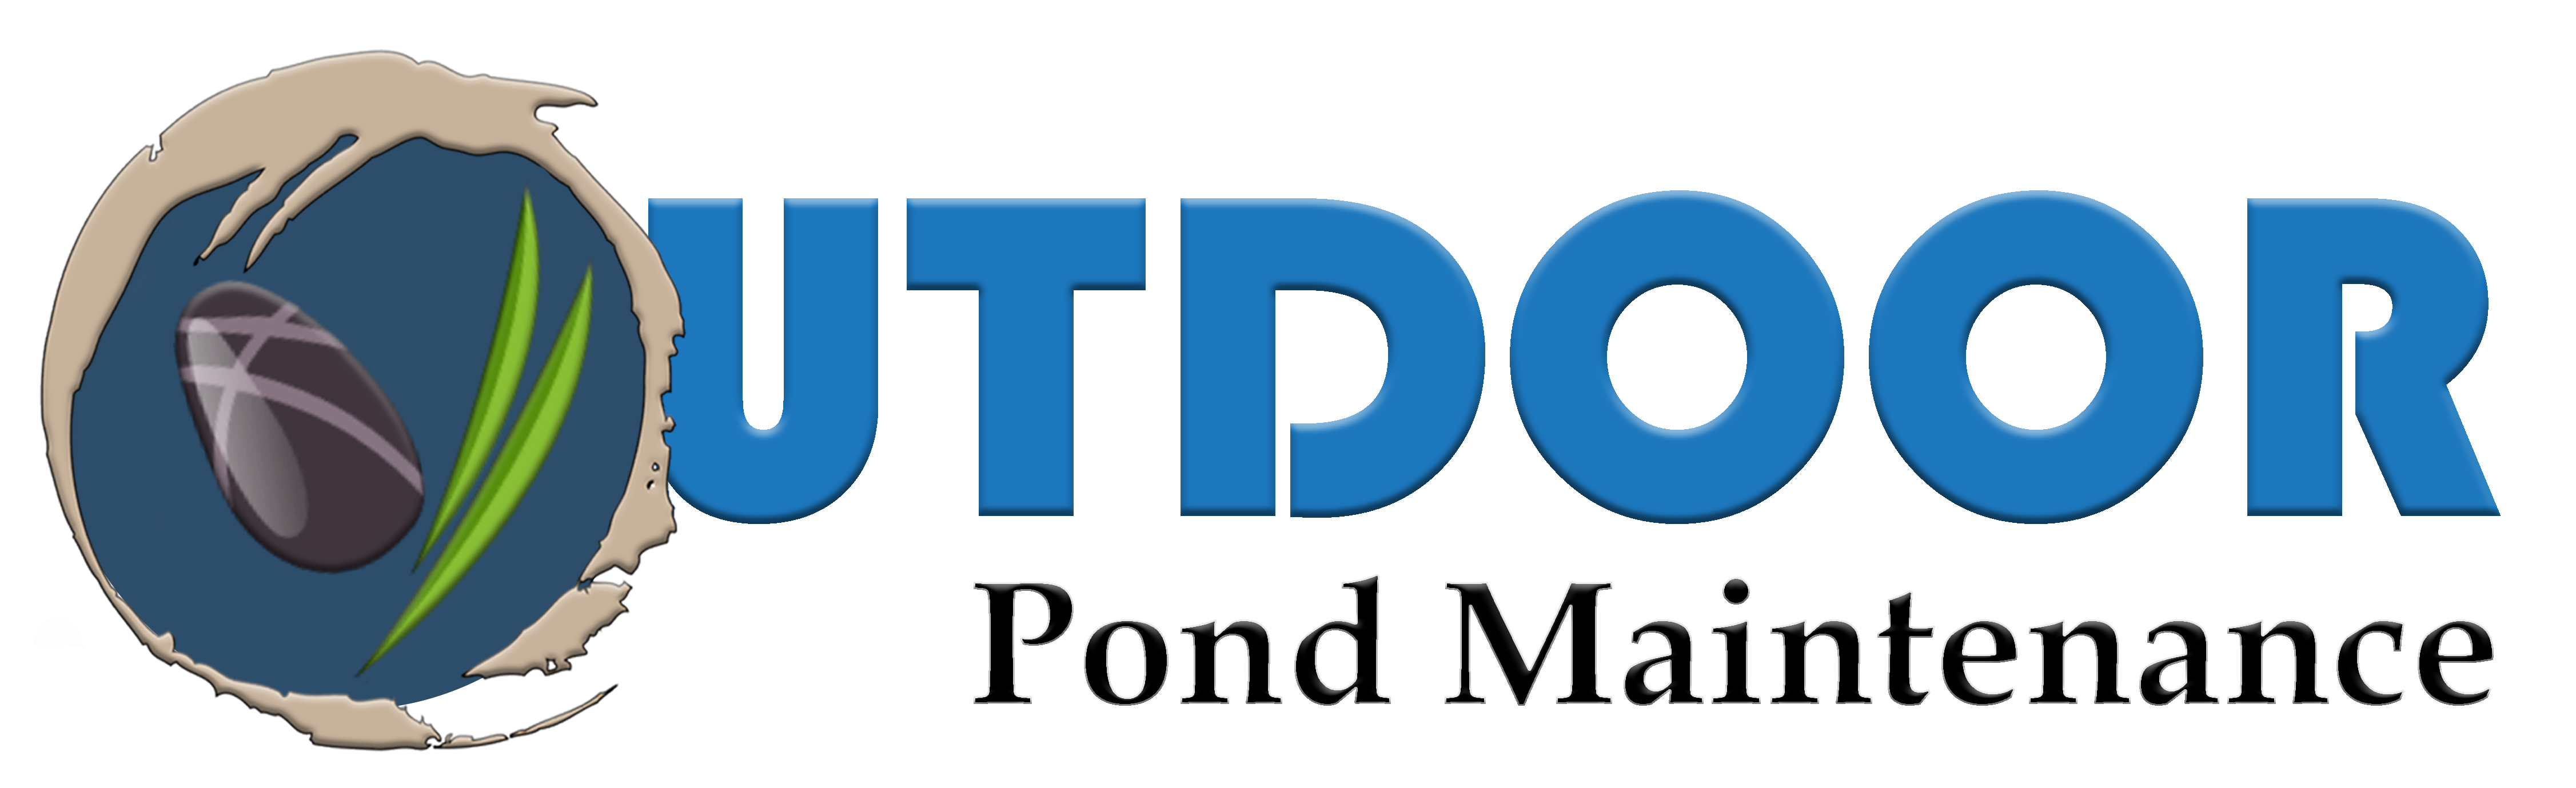 Pond Maintenance Services Logo